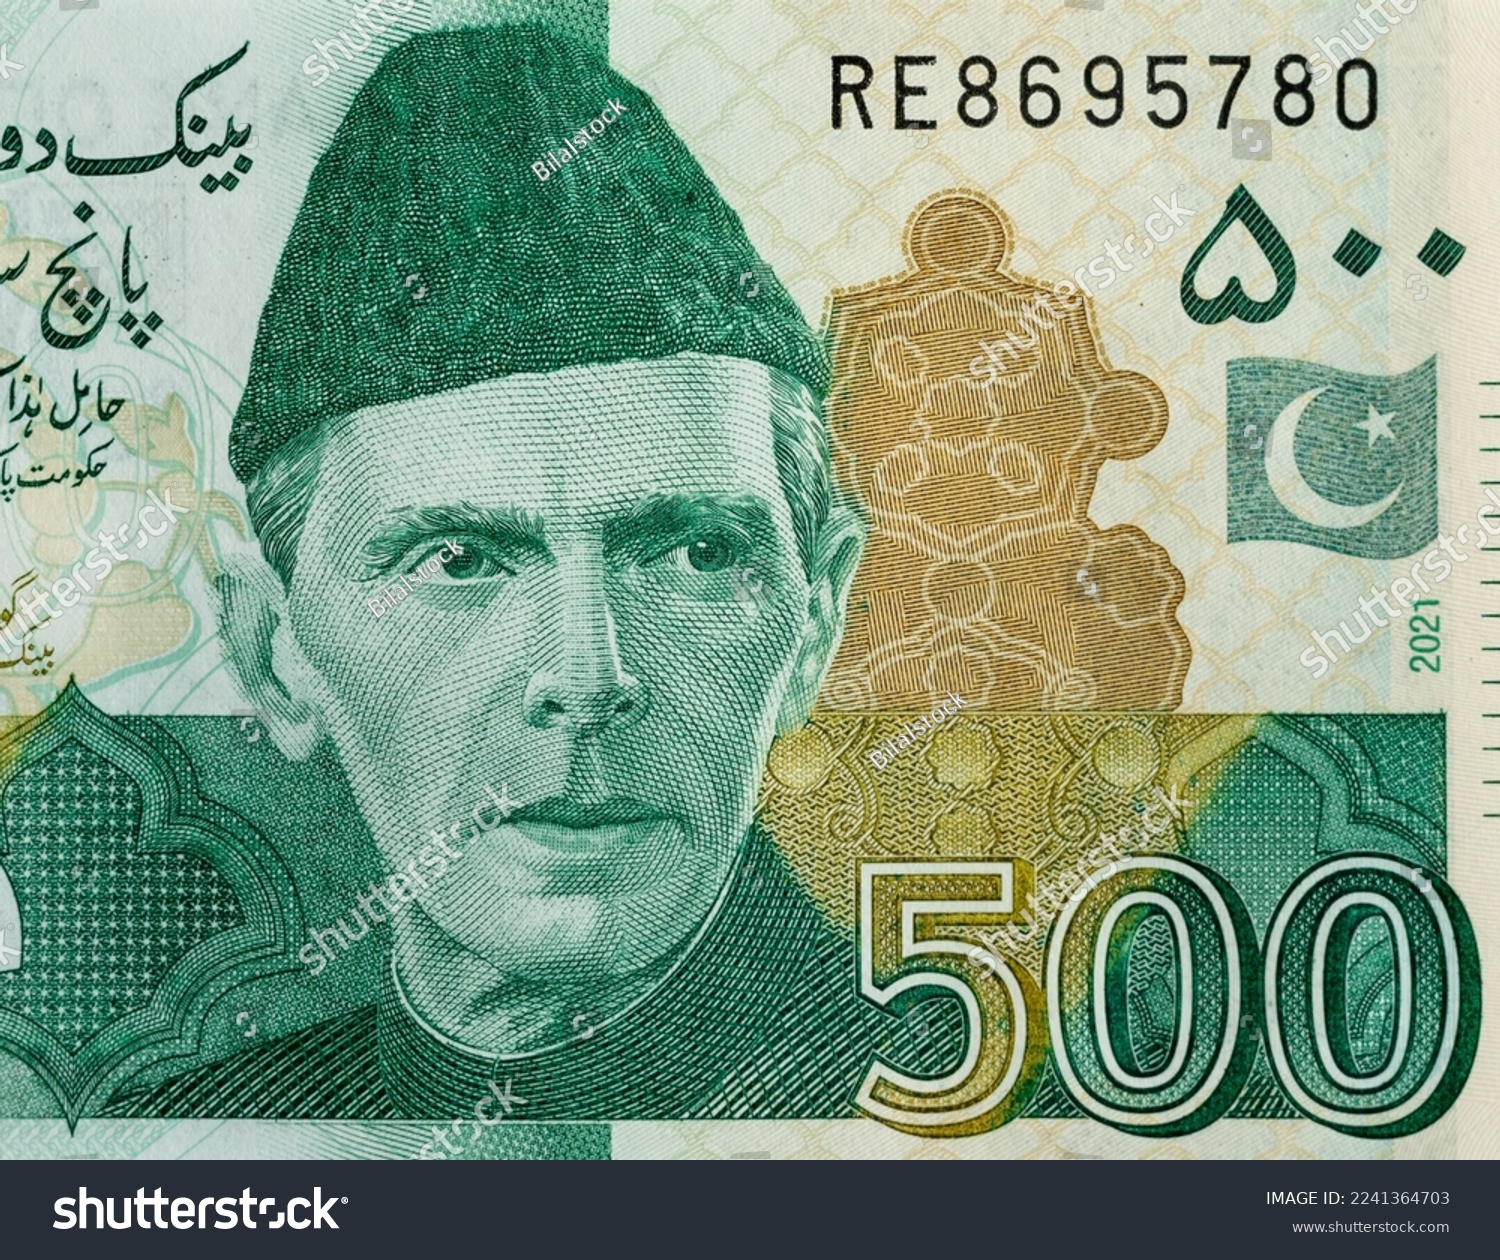 The Quaid-e-Azam Muhammad Ali Jinnah portrait - Royalty Free Stock ...